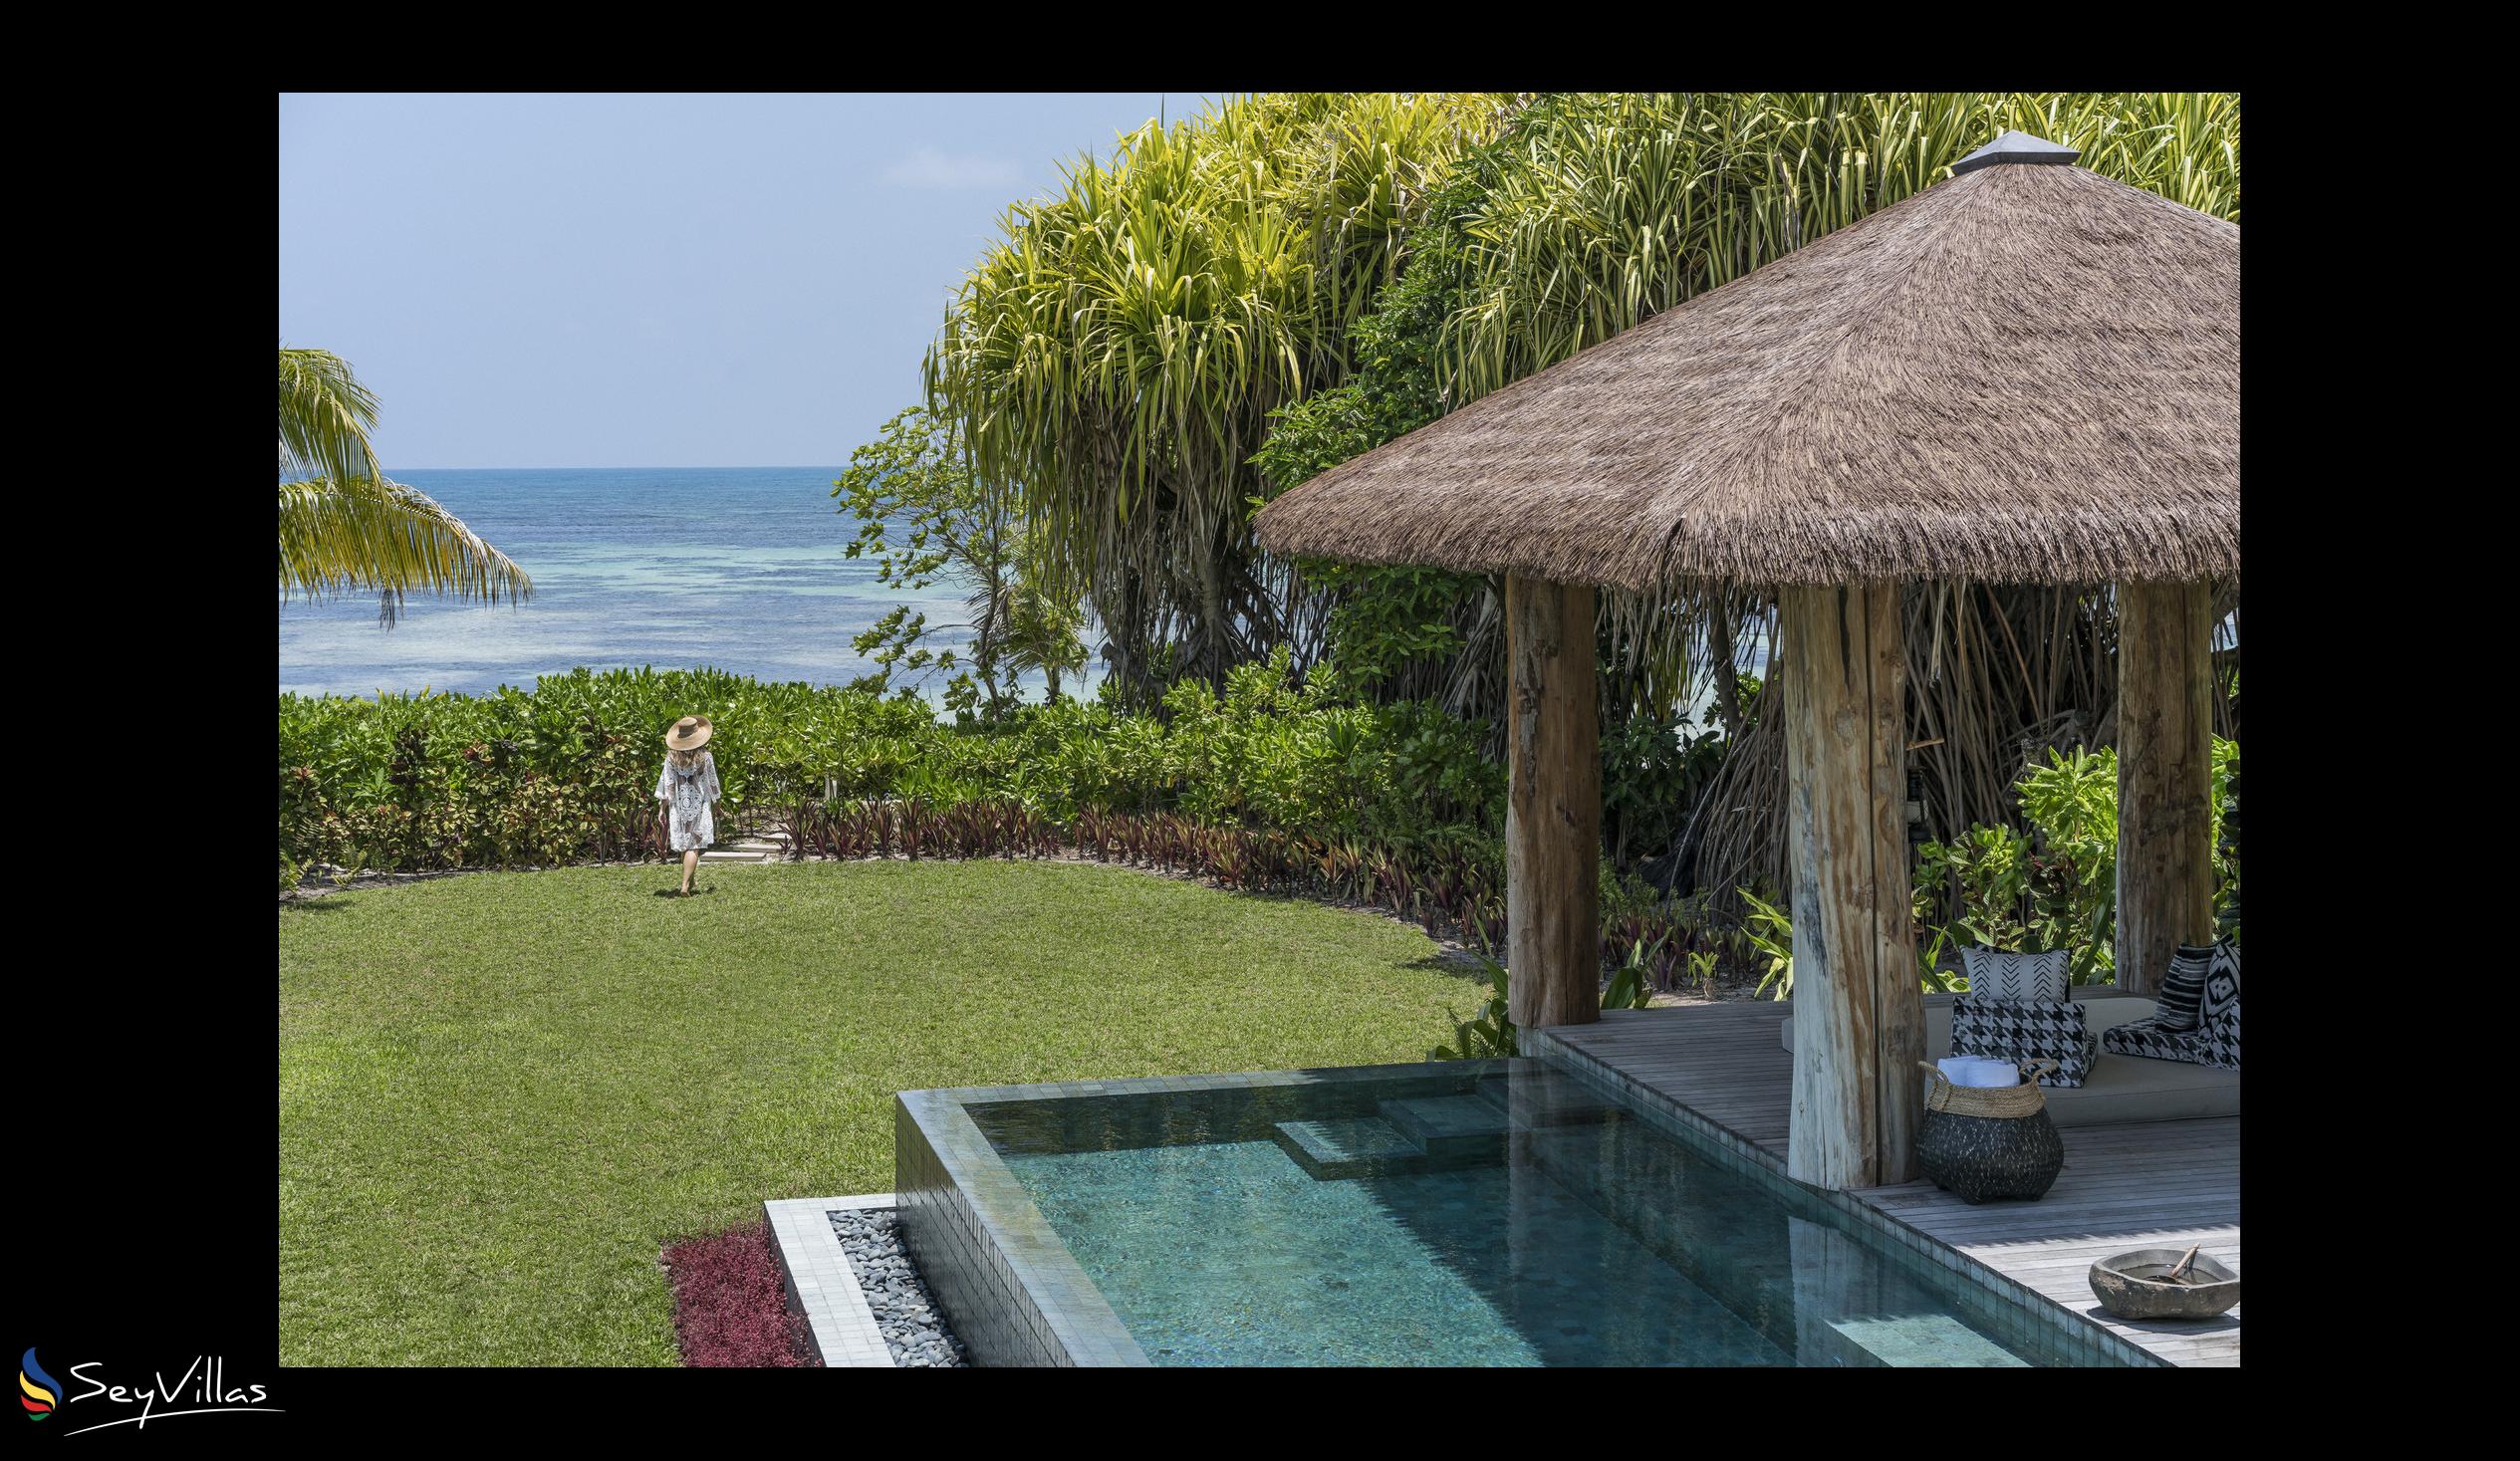 Foto 43: Four Seasons Resort Desroches Island - Ocean View Pool Villa - Desroches Island (Seychellen)